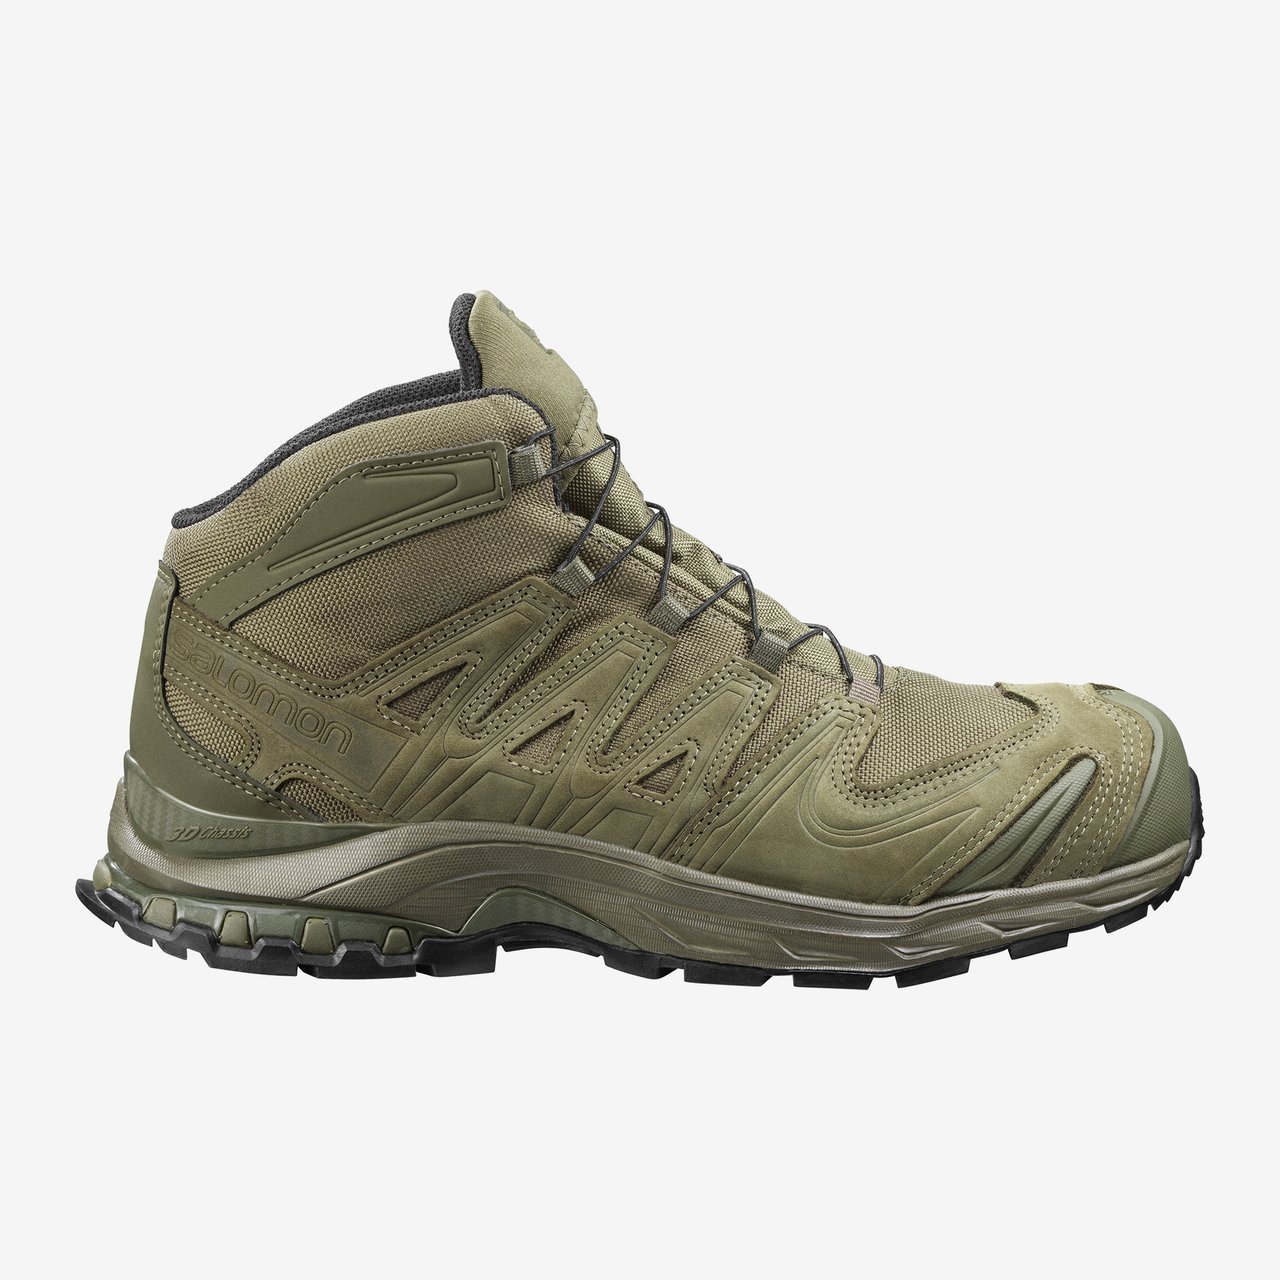 BOOTS XA MID - RANGER GREEN - SALOMON Ranger Green | Footwear \ Low boots \ Black militarysurplus.eu | Army Navy Surplus - Tactical | Big variety - Cheap prices